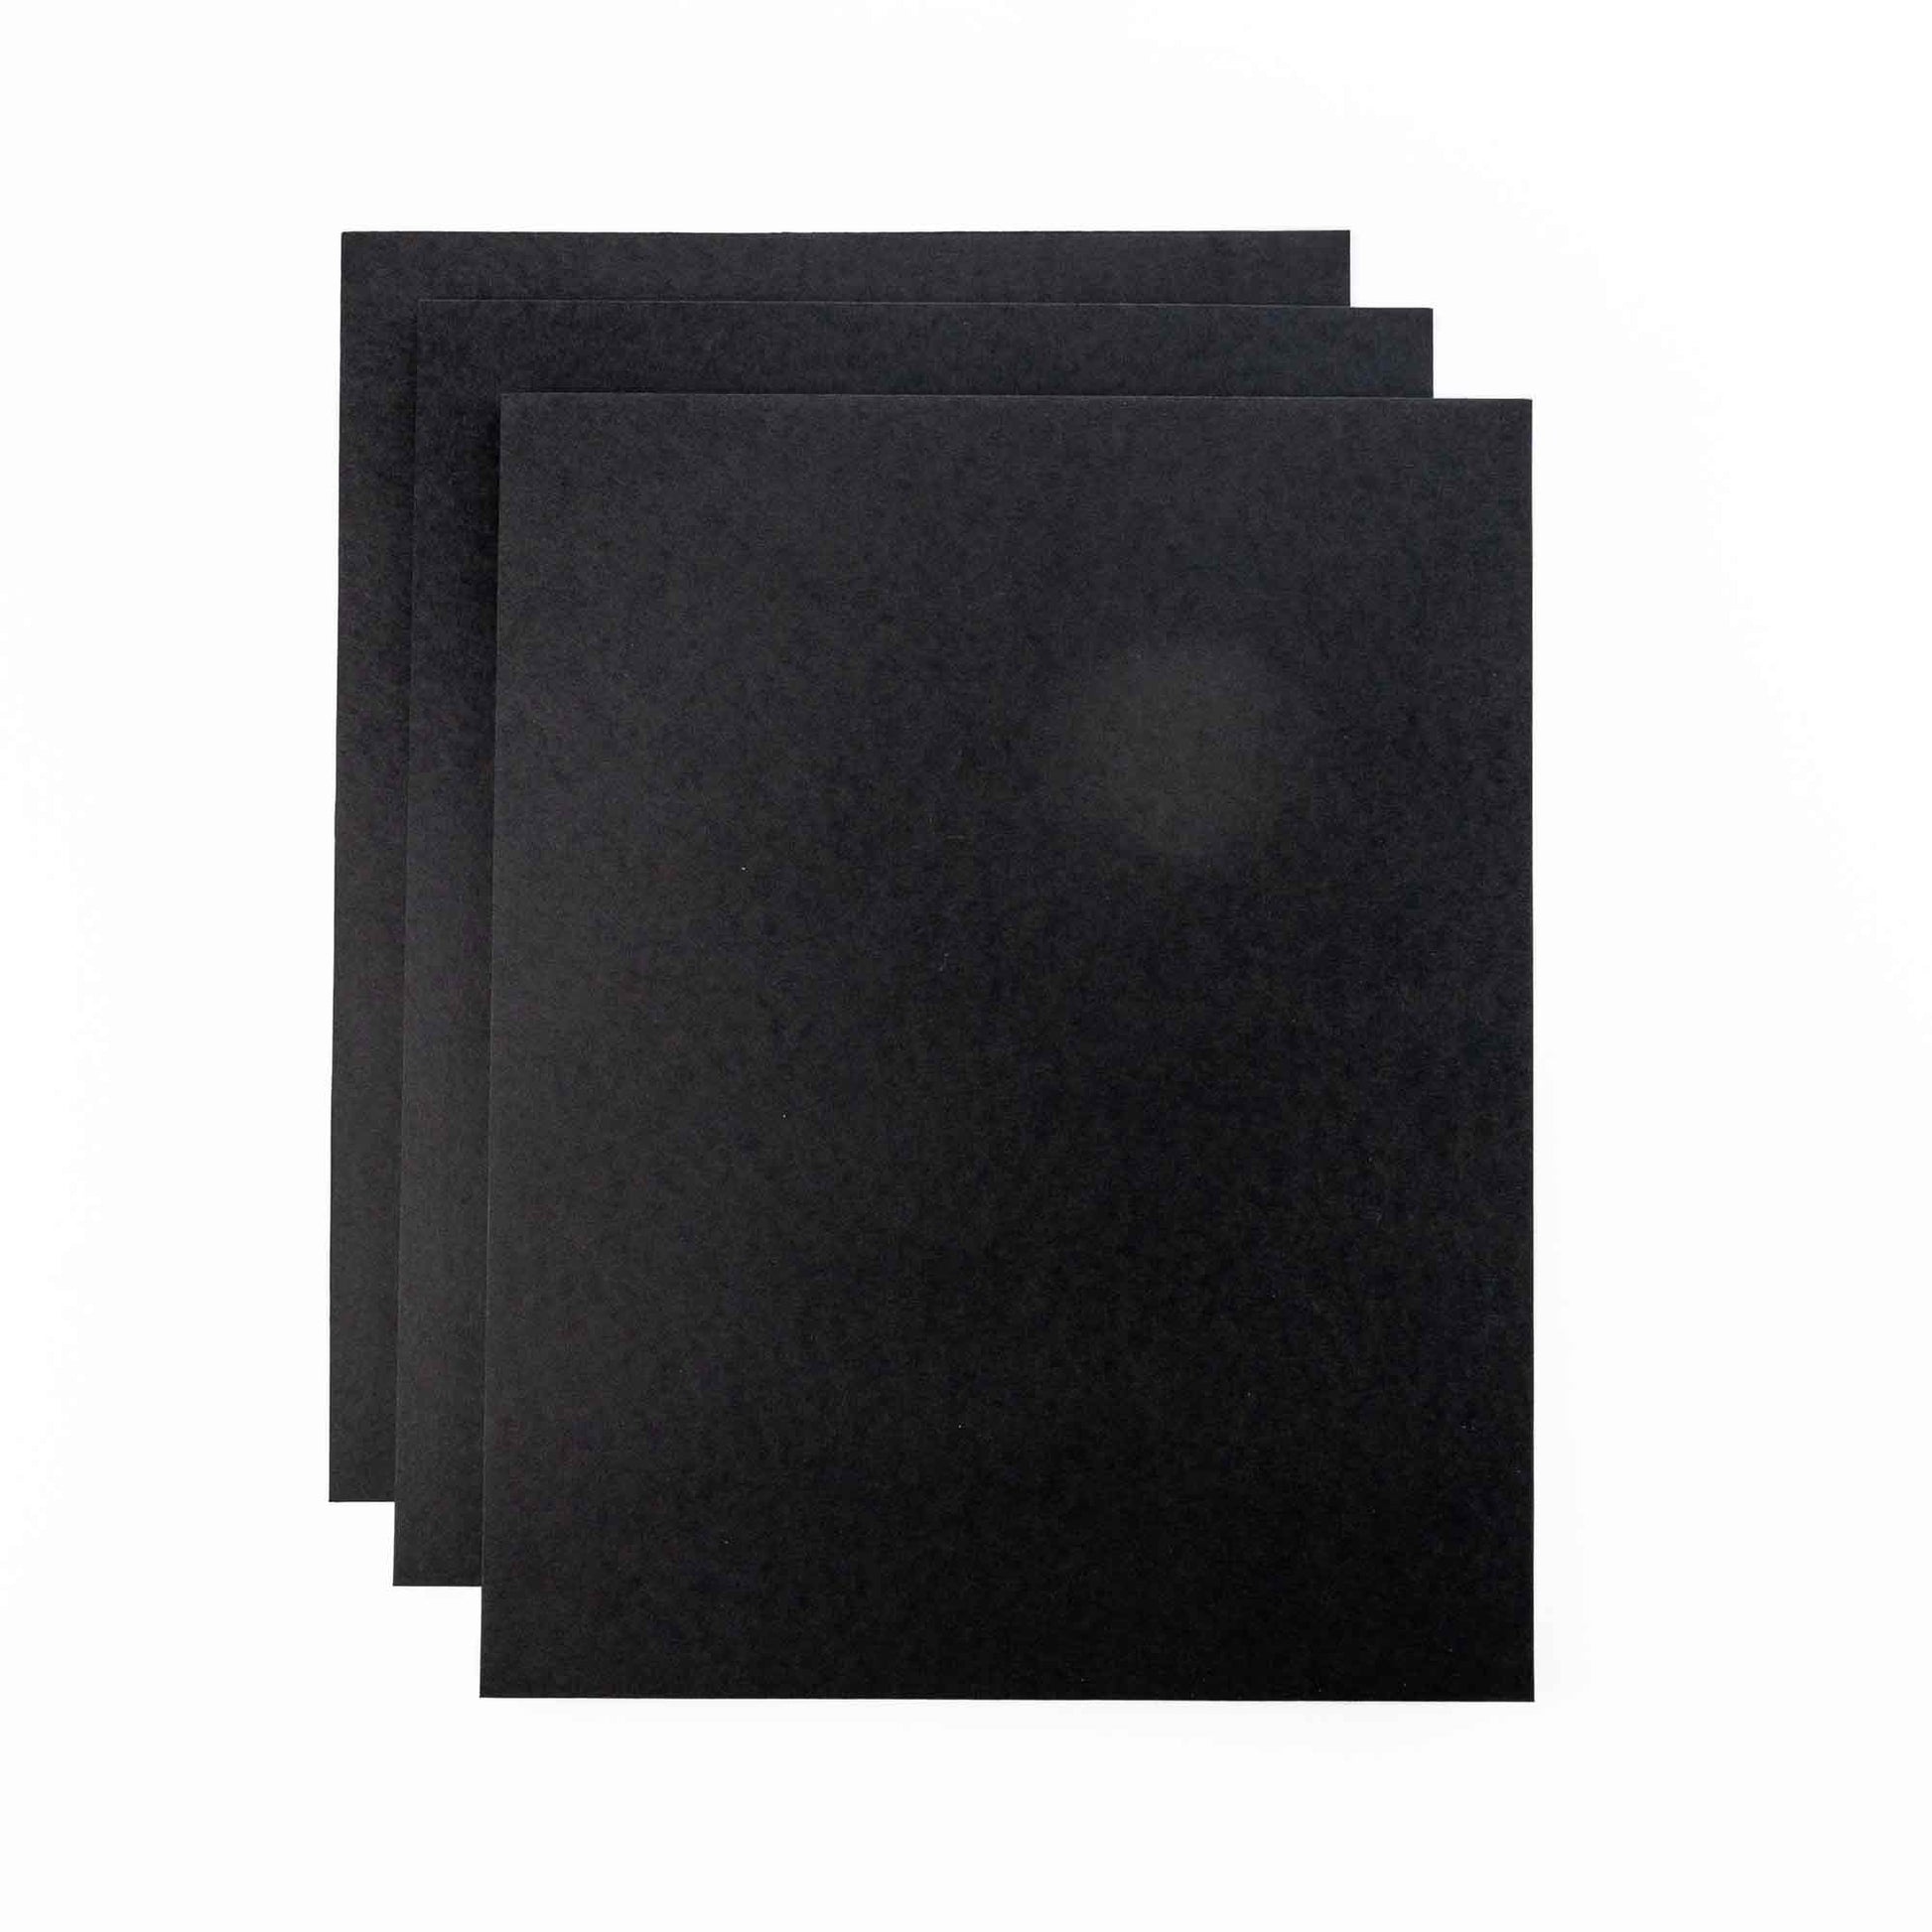 Foam Core Backing Board 3/16 Black 16x20- 50 Pack. Many Sizes